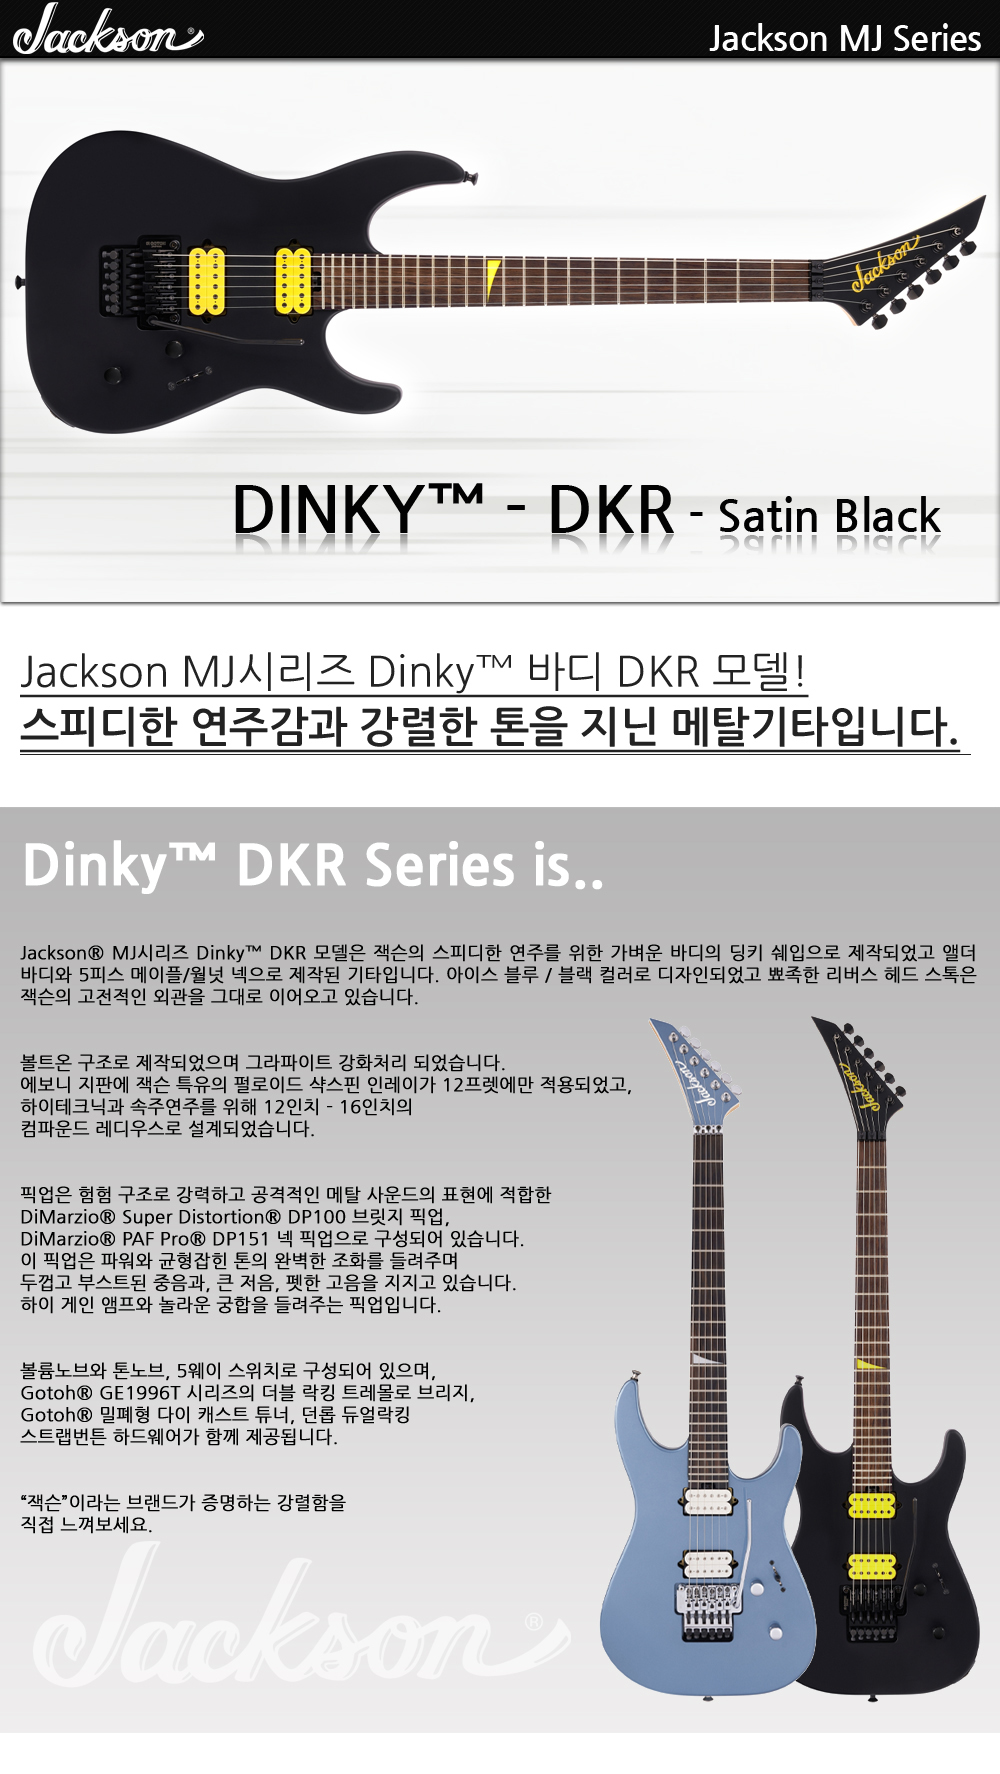 Jackson-MJ-Dinky-DKR-SatinBlack_1_171352.jpg